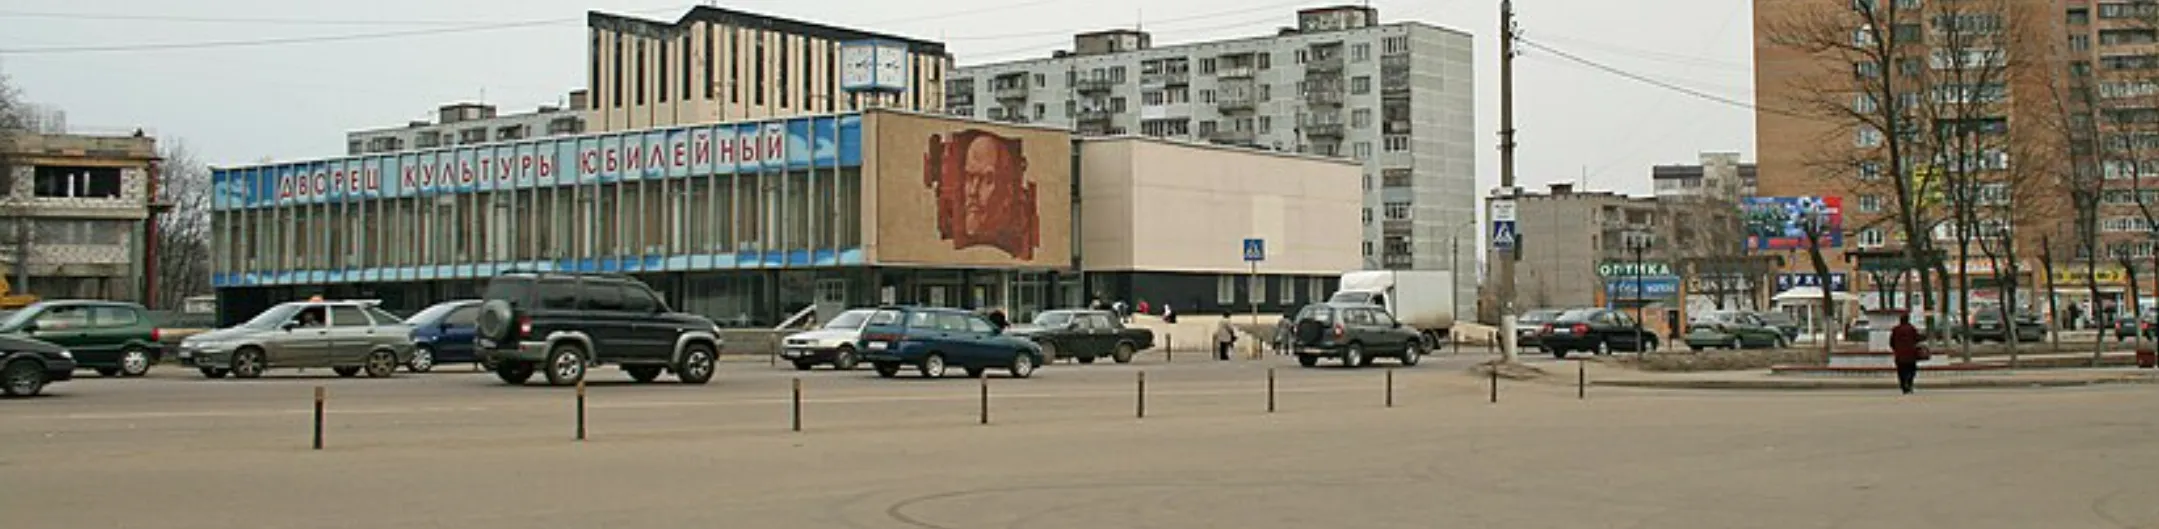 Poster Ivanteevka